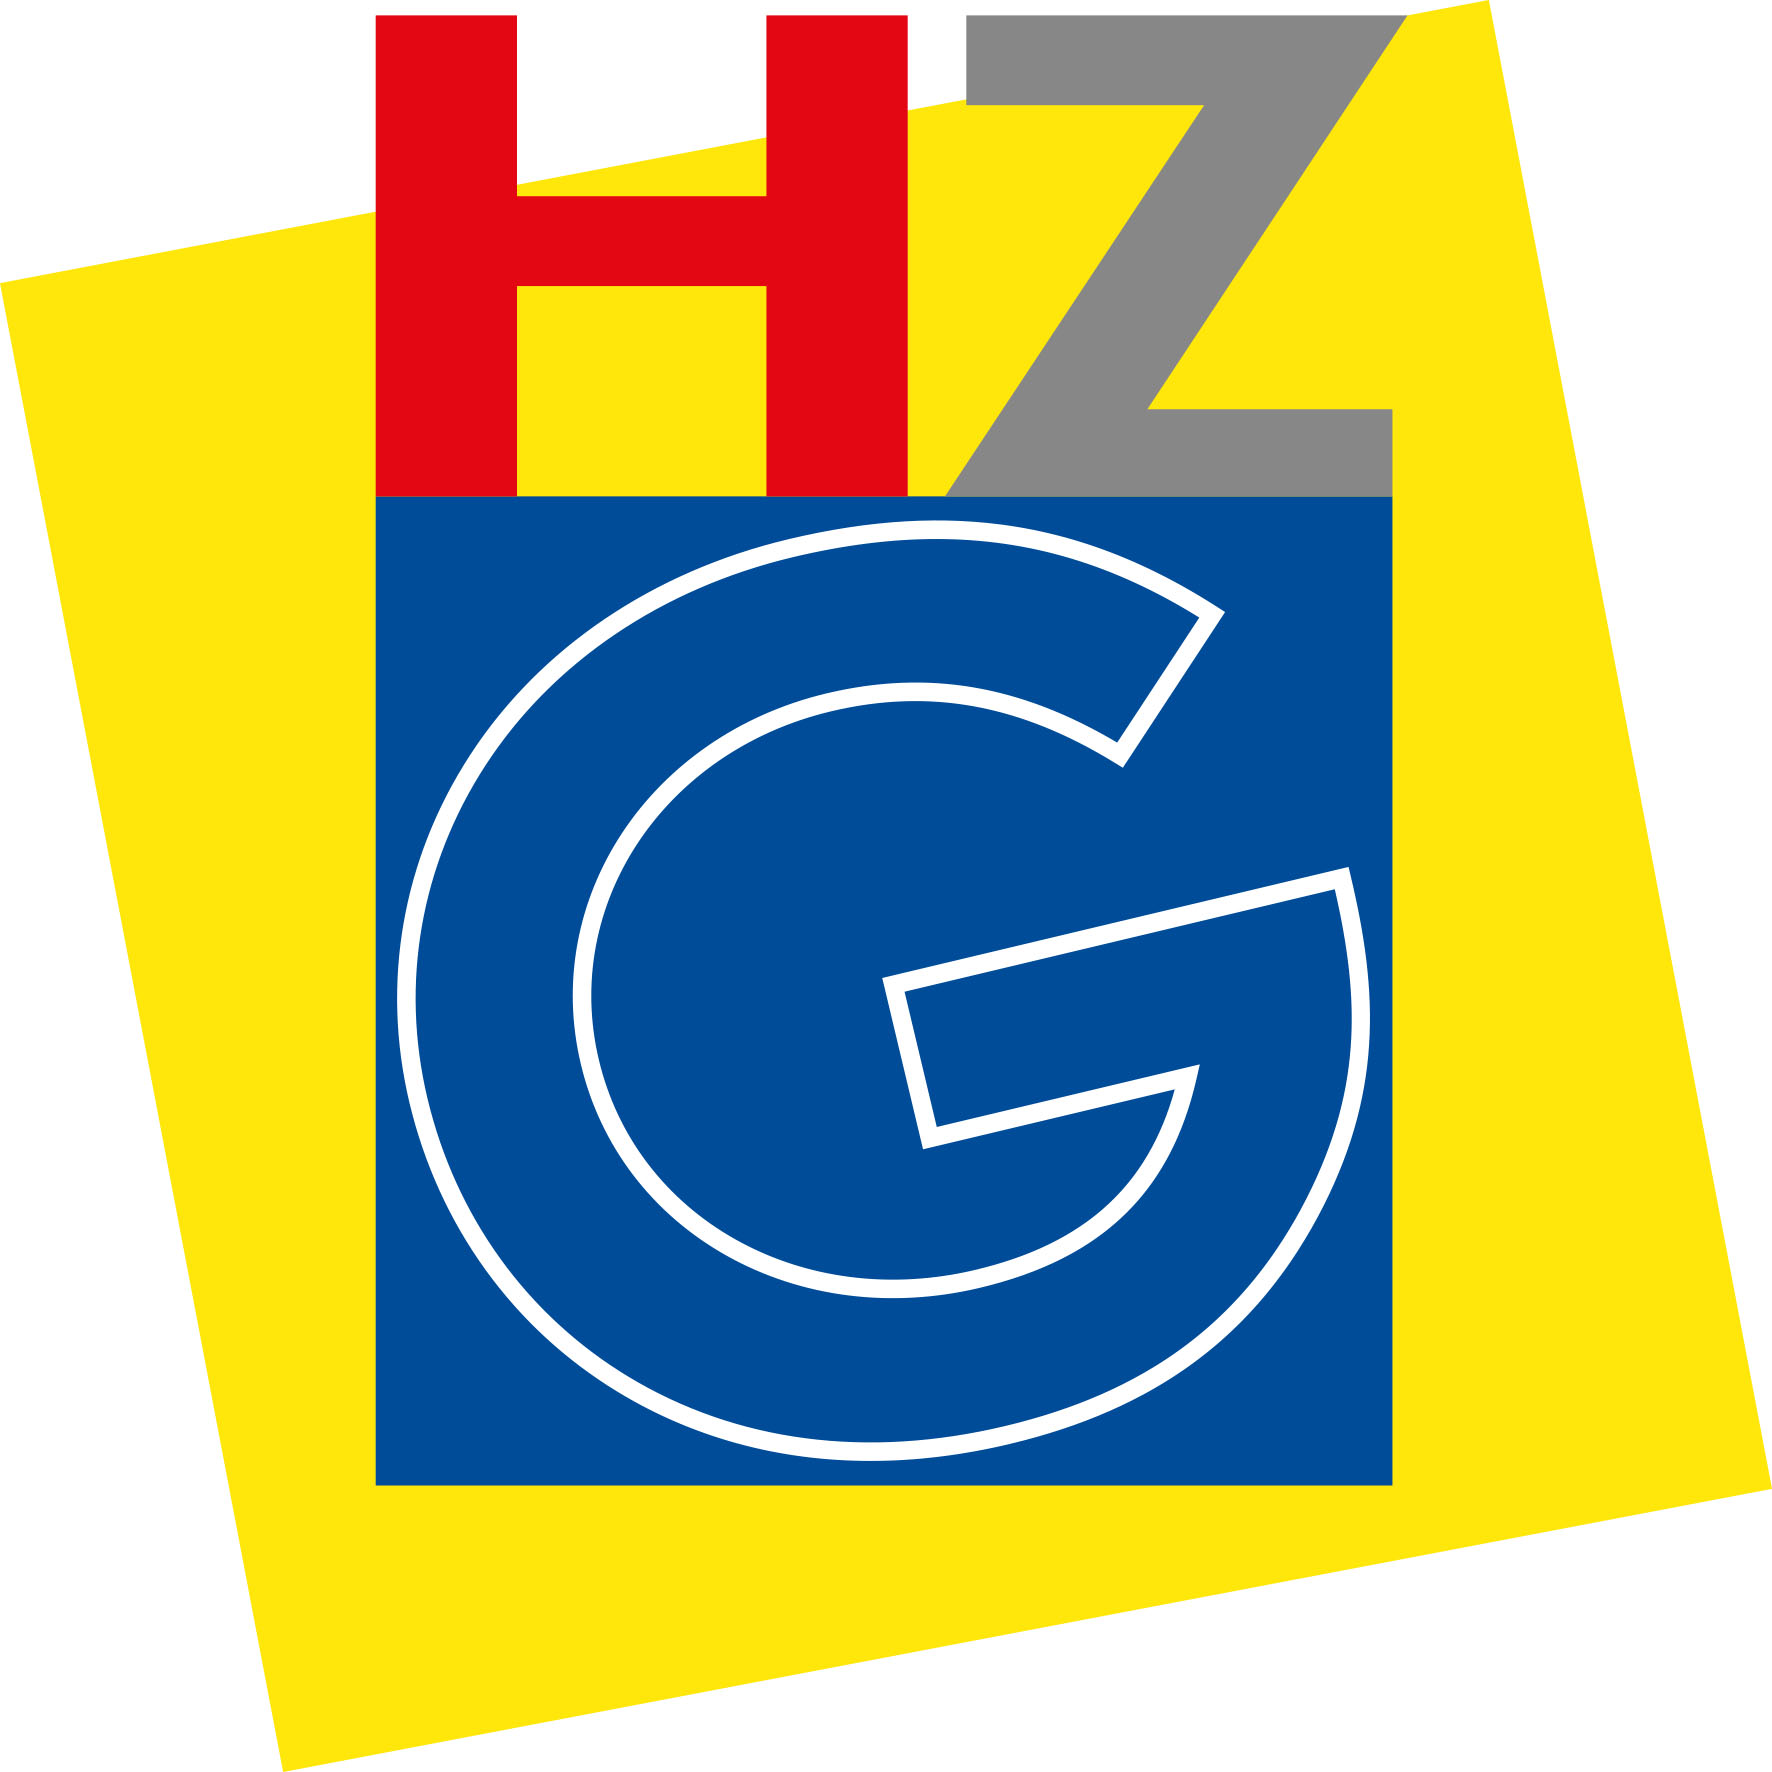 HZG Sigmaringen